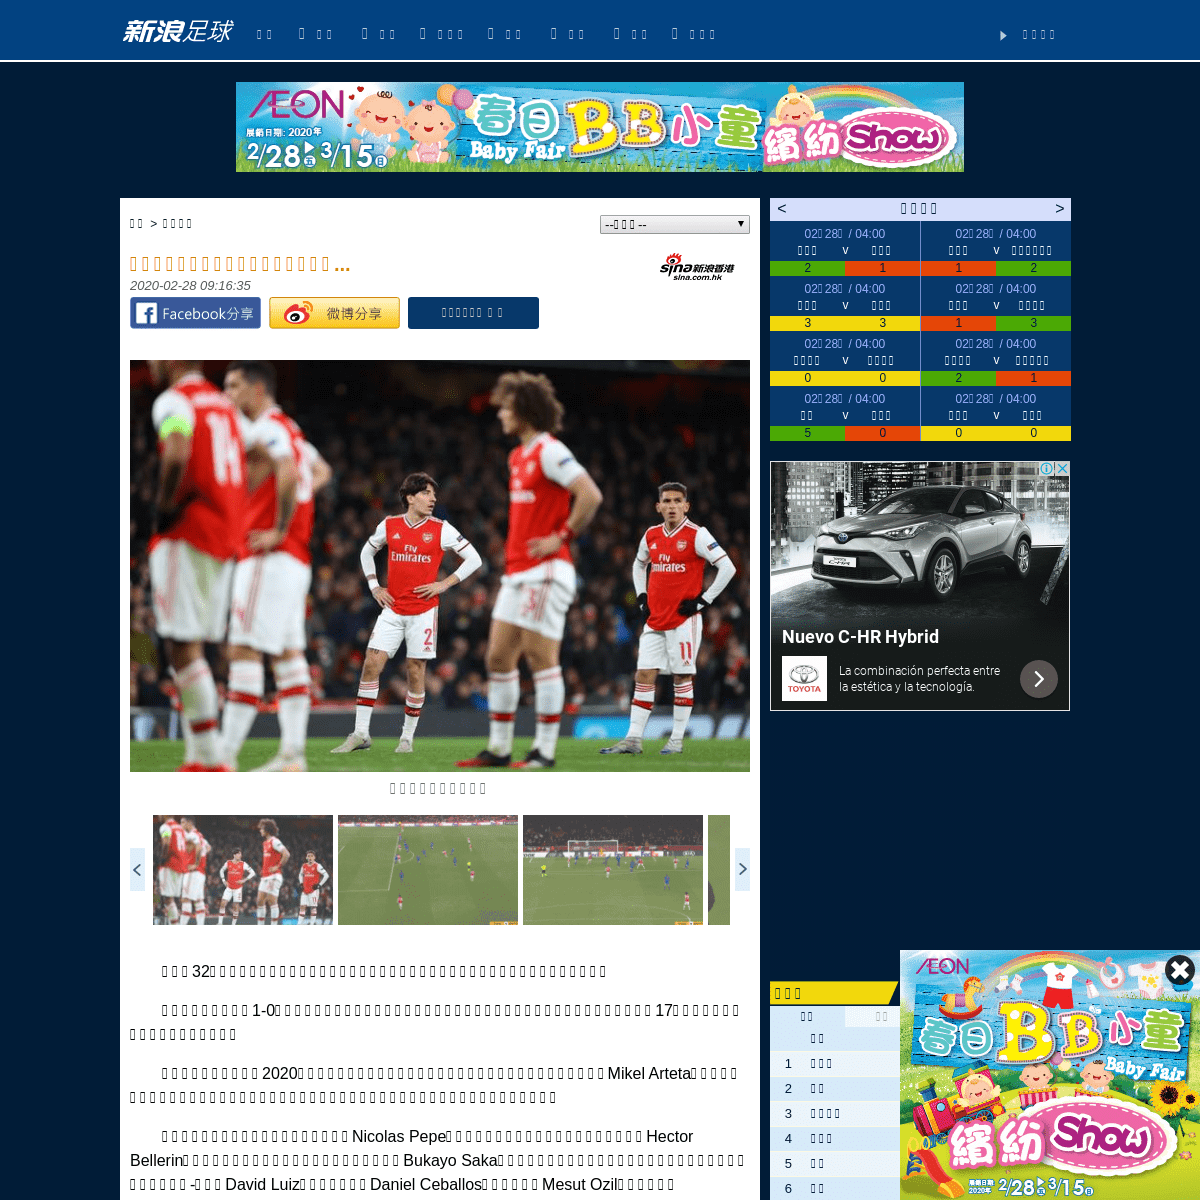 A complete backup of soccer.sina.com.hk/news/7/20200228/11274413/